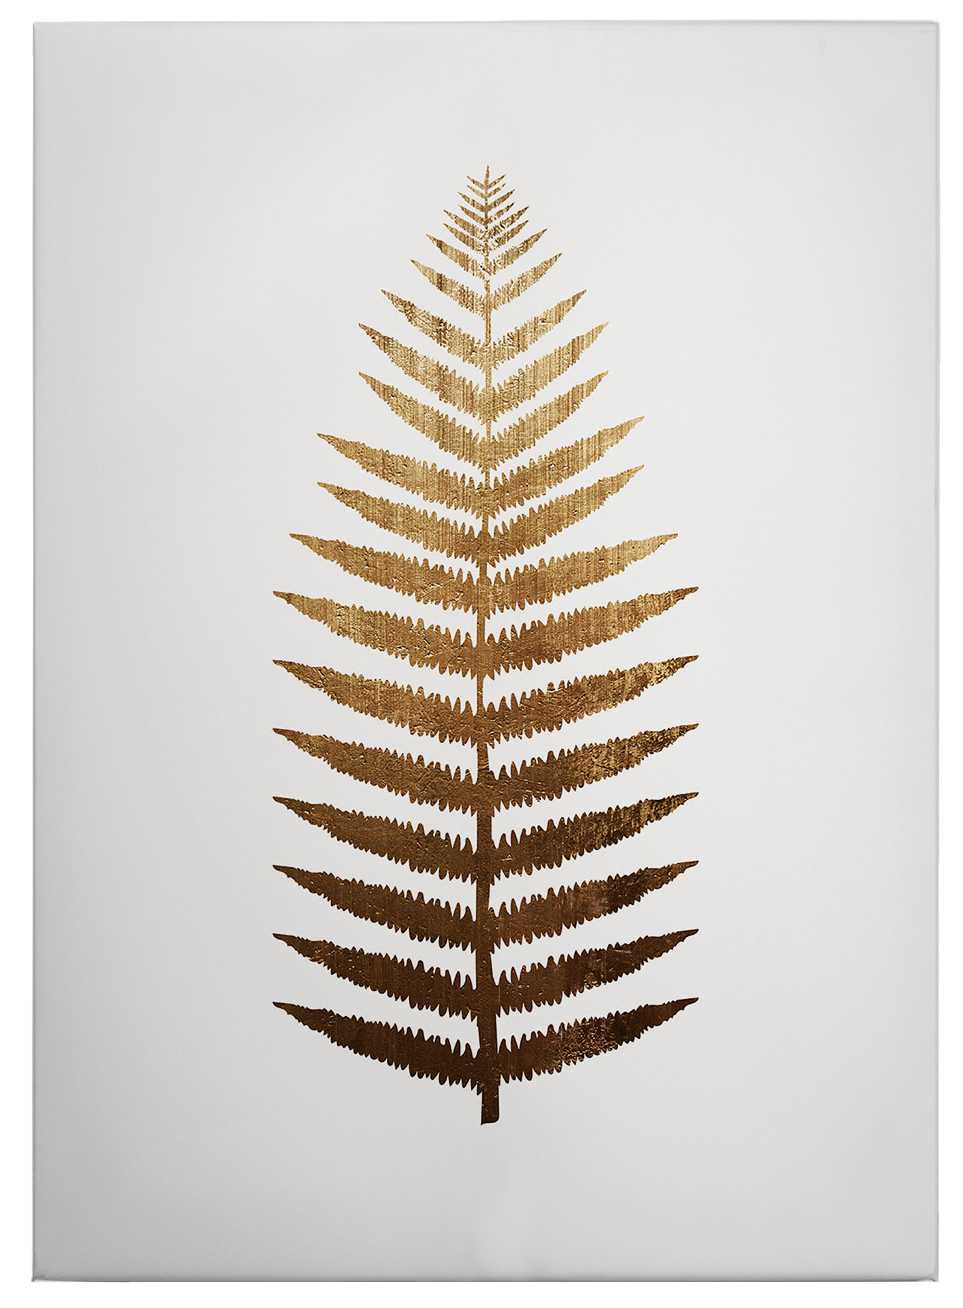             Canvas print "Golden fern" by Kubistika – gold
        